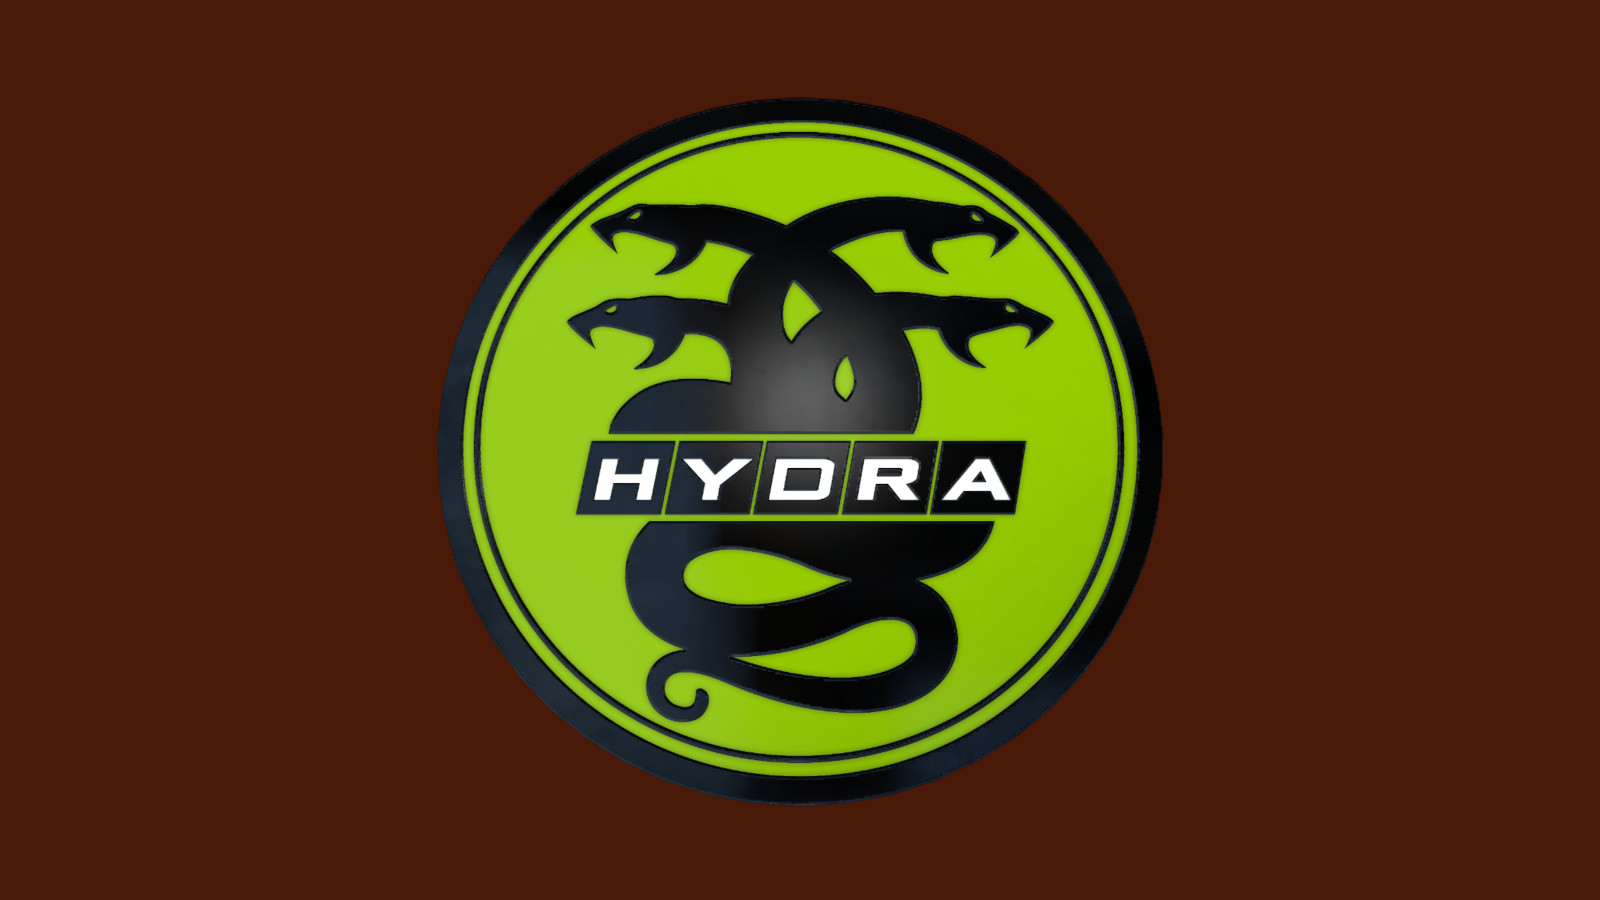 CS:GO - Series 3 - Hydra Collectible Pin